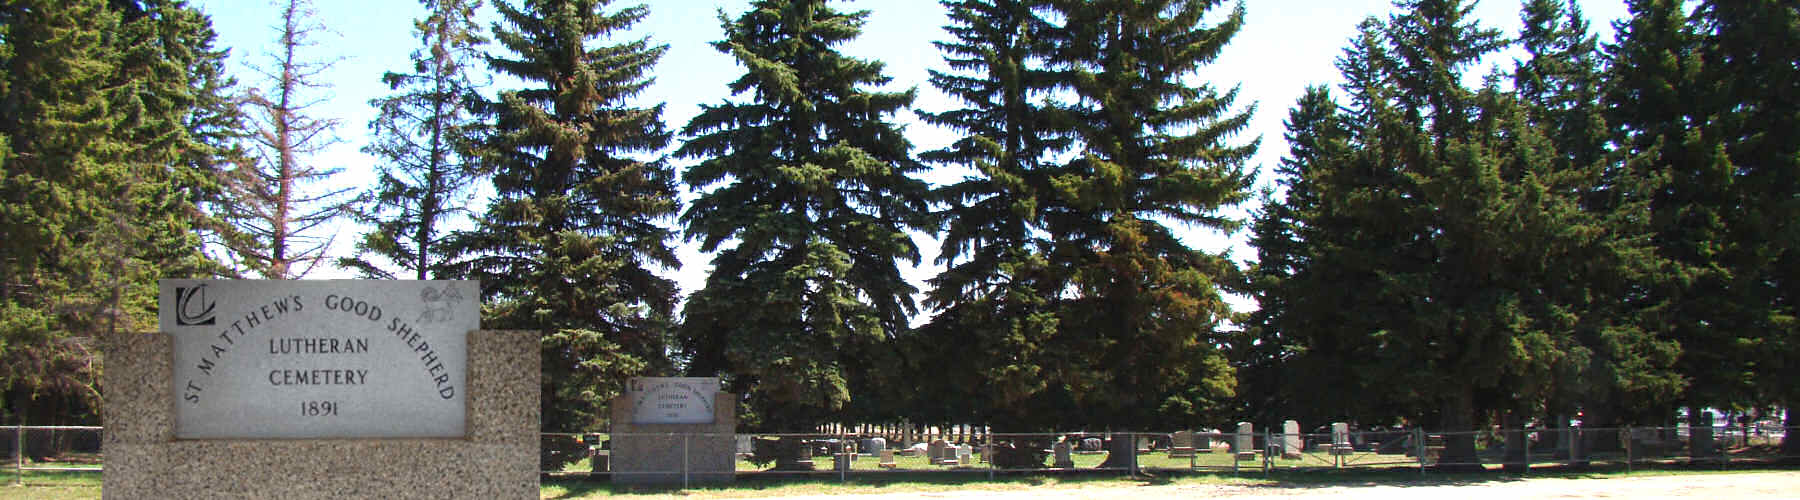 St Matthew's Lutheran Church & Good Shepherd Lutheran Church Cemetery 1891